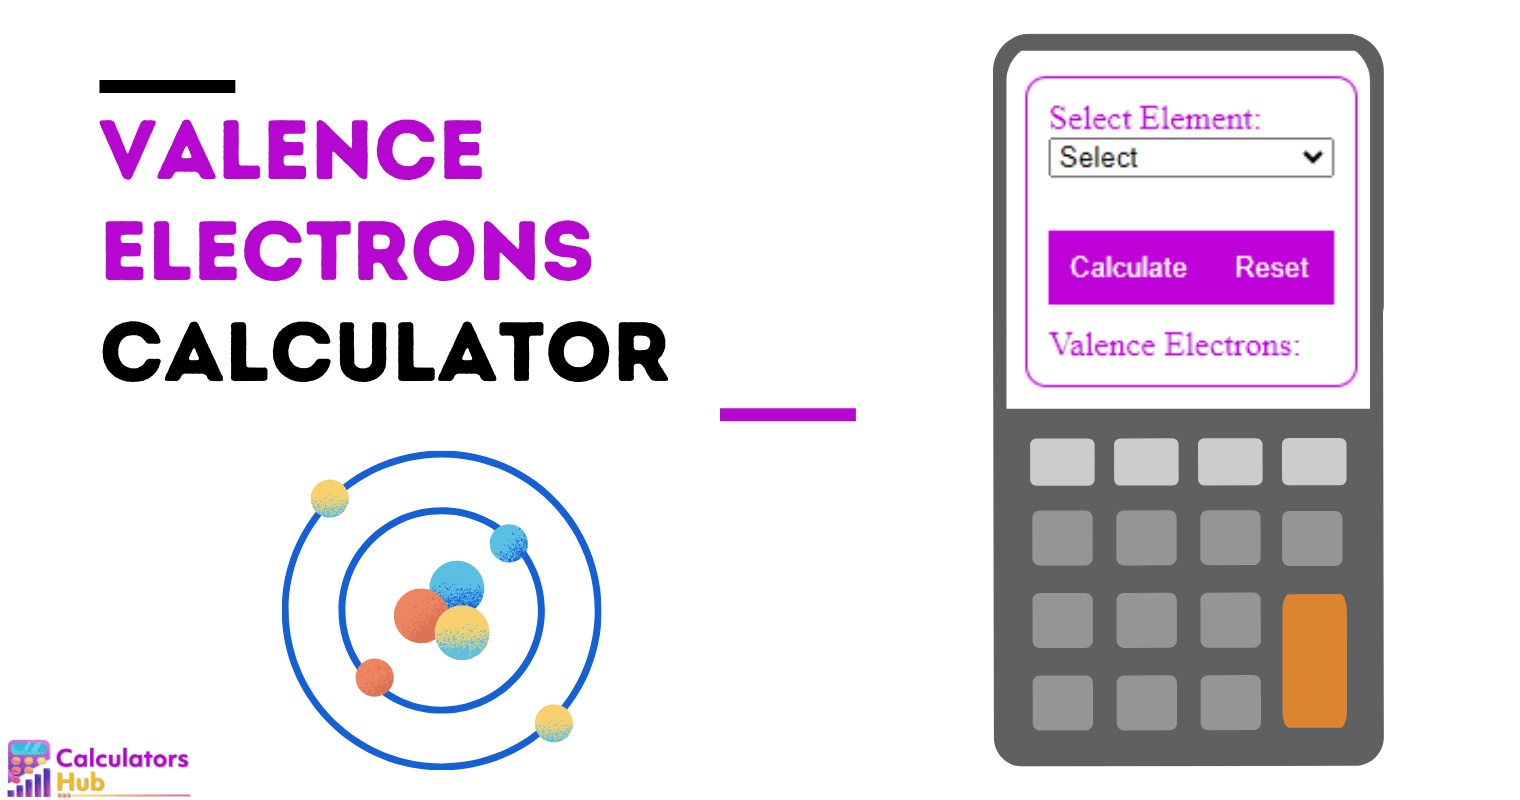 Valence Electrons Calculator